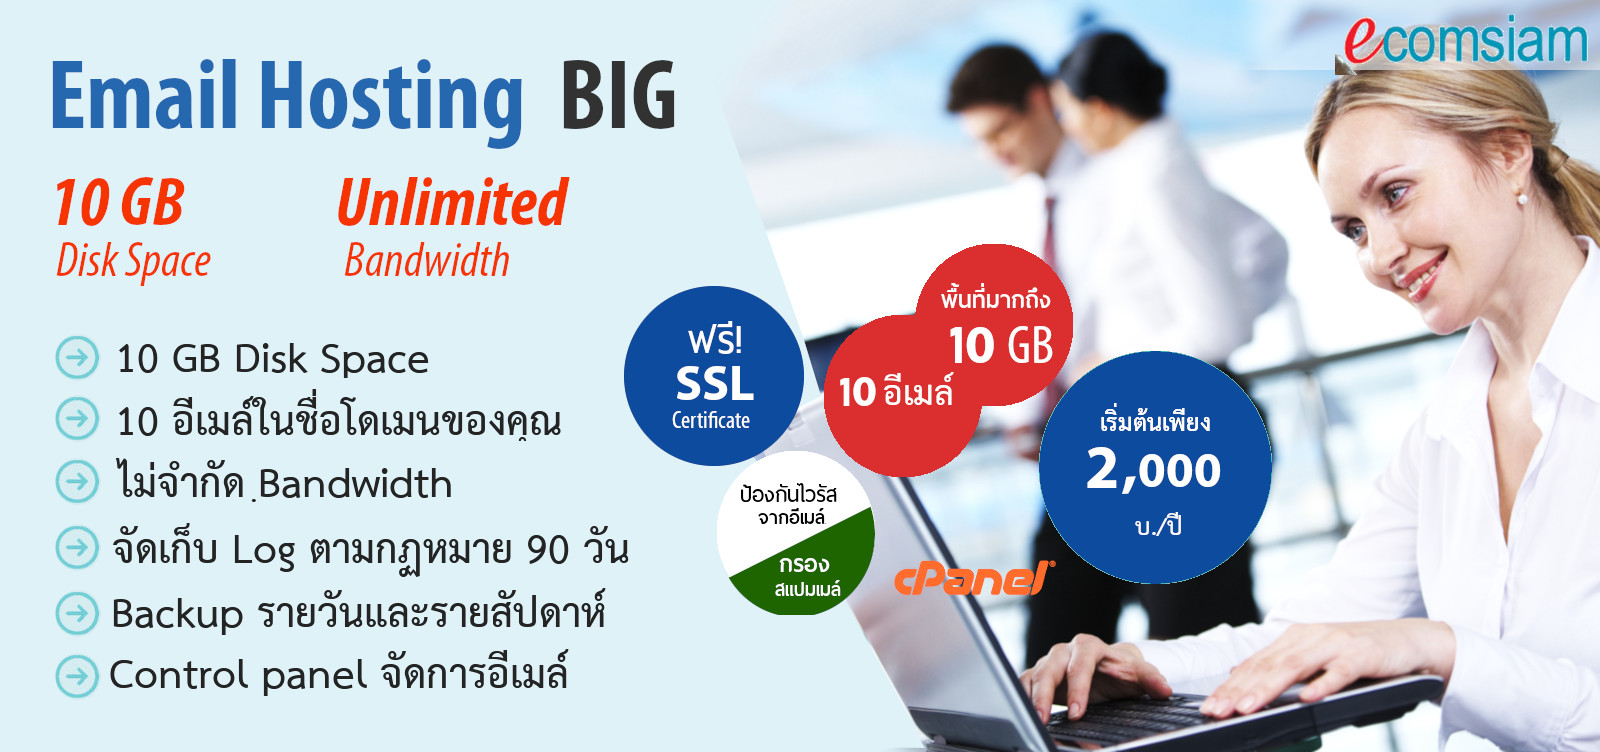 email hosting thailand คุณภาพสูง สำหรับองค์กร พื้นที่ขนาดใหญ่ ราคาไม่แพง คุ้มค่าสุดๆ เว็บโฮสติ้งไทย free SSL